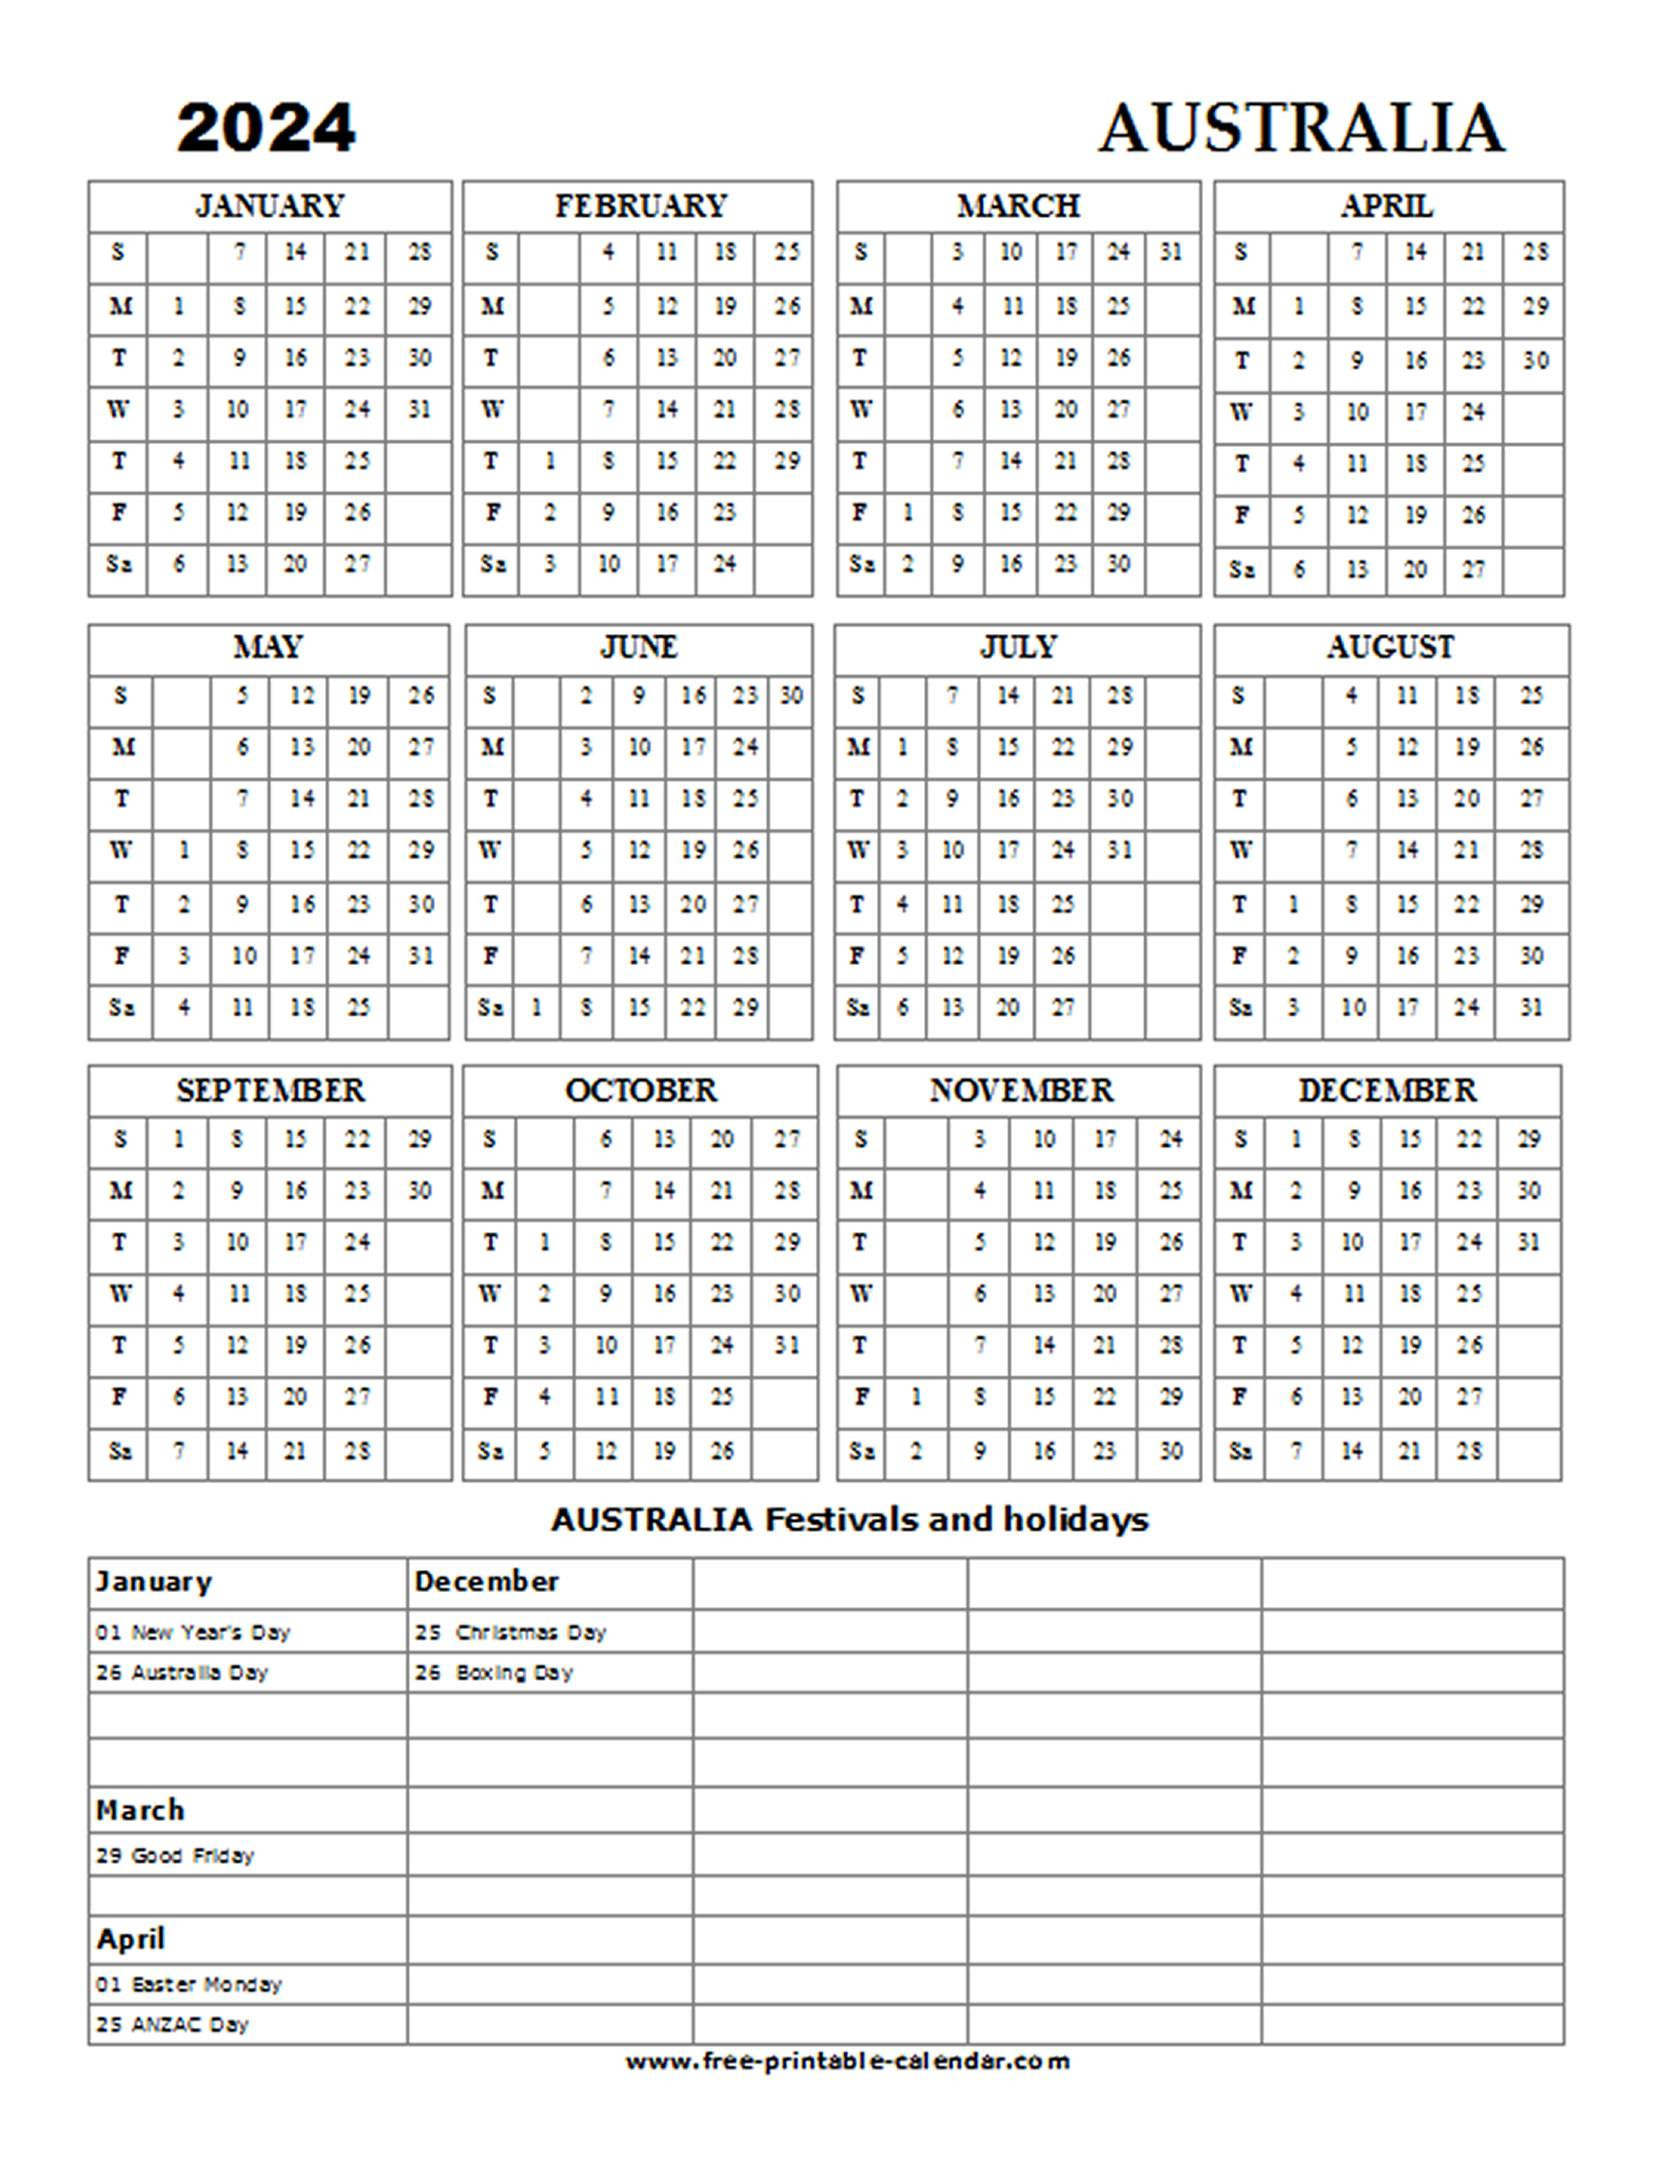 2024 Australia Holiday Calendar - Free-Printable-Calendar | 2024 Yearly Calendar Australia